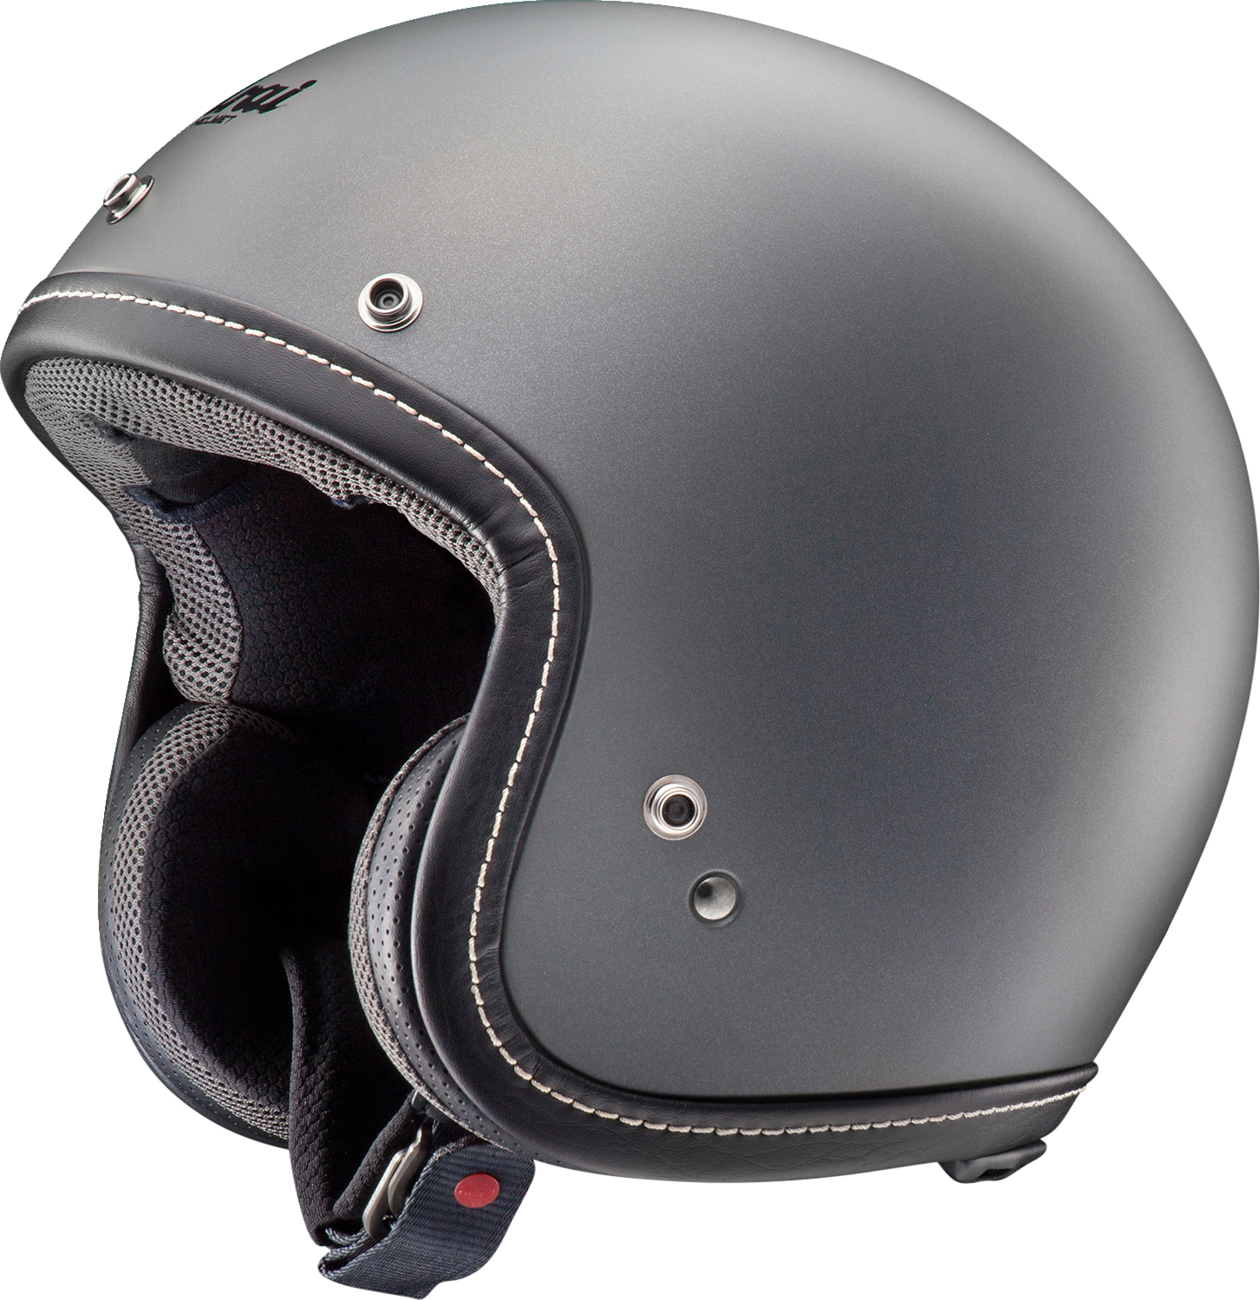 ARAI Classic-V Helmet - Gun Metallic Frost - XL 0104-2974